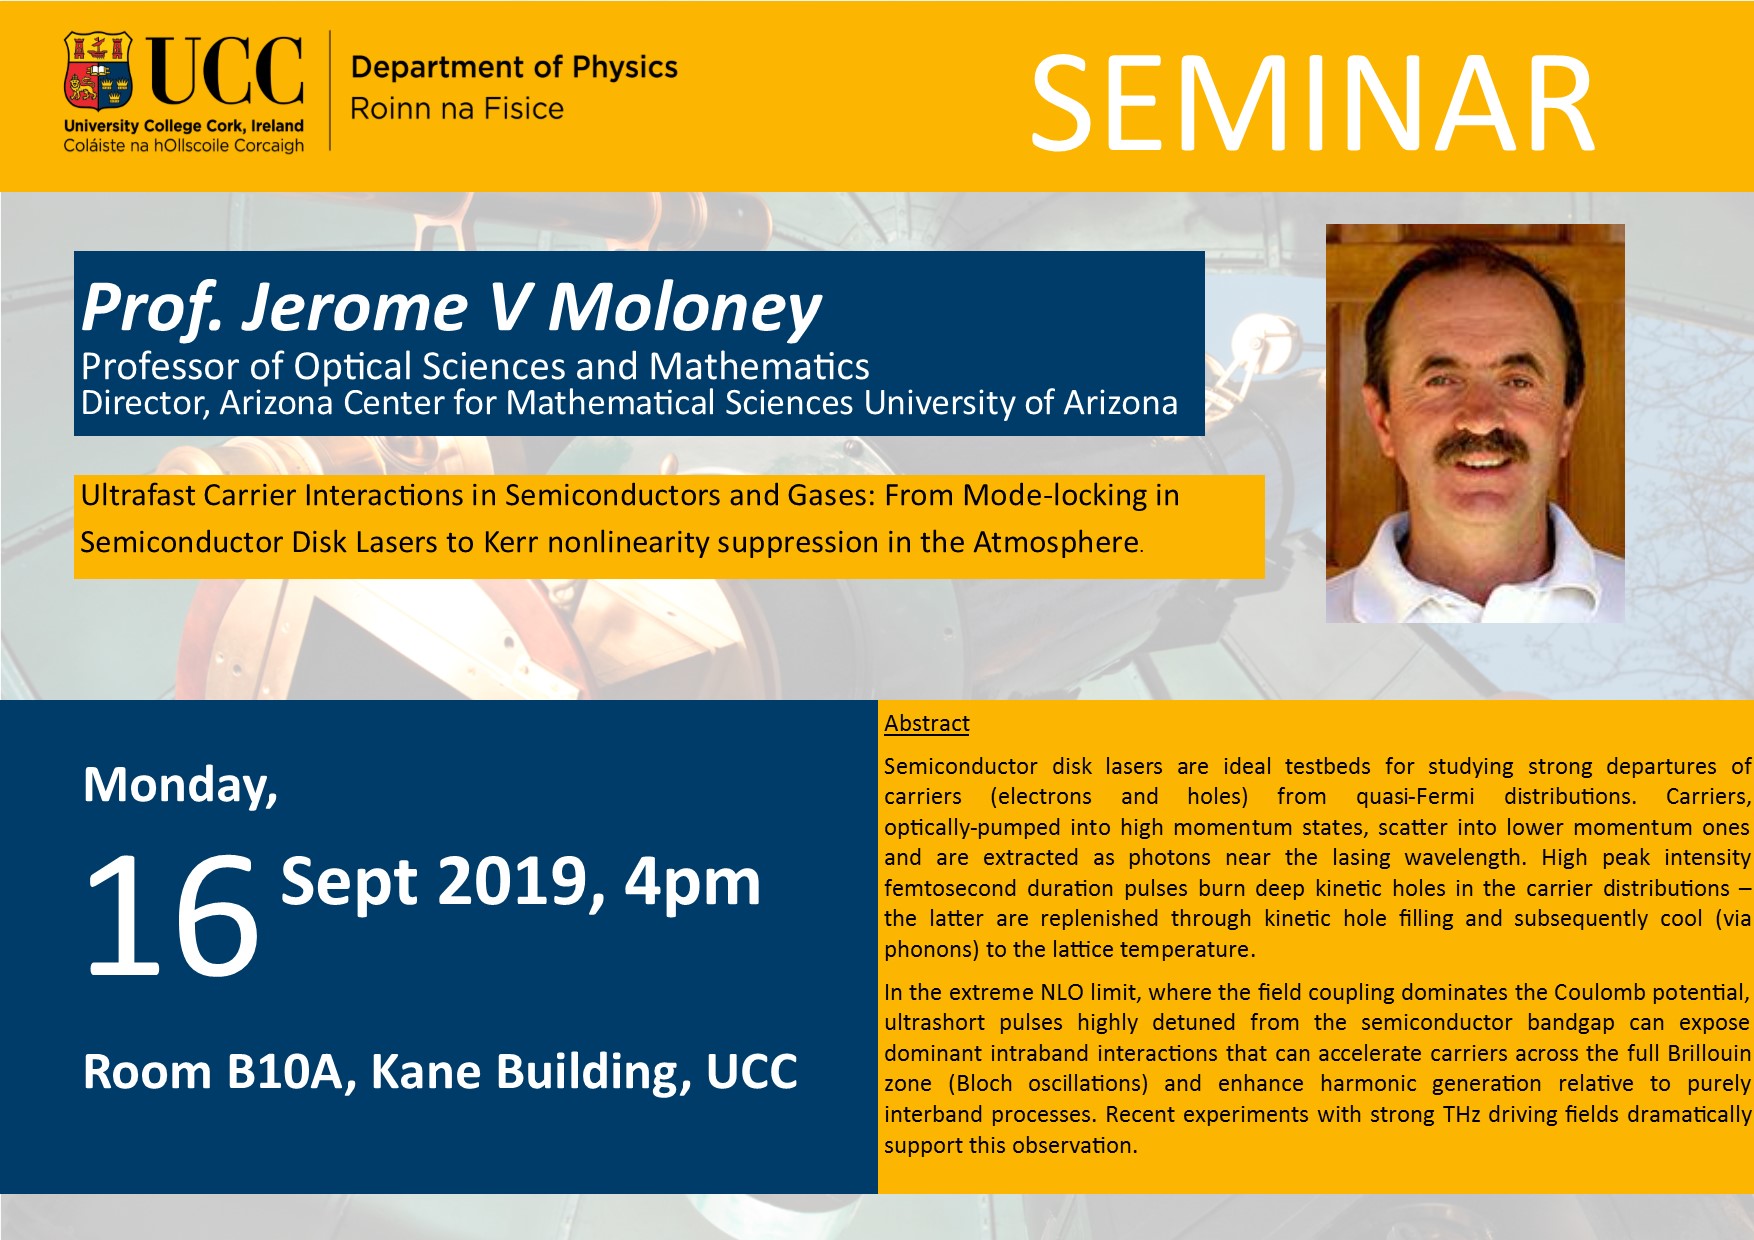 Seminar POster for Jerome V Moloney 16 Sept 2019